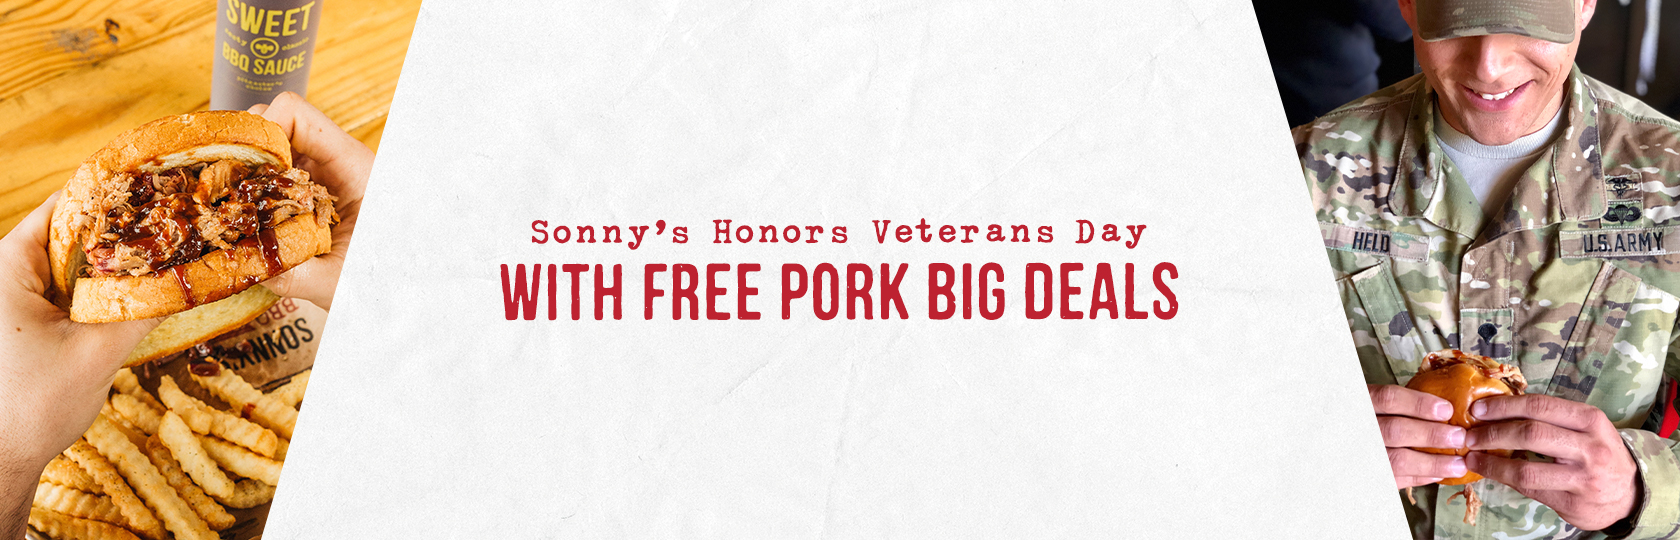 veterans-day-offer-free-pork-big-deal-at-sonny-s-page-sep